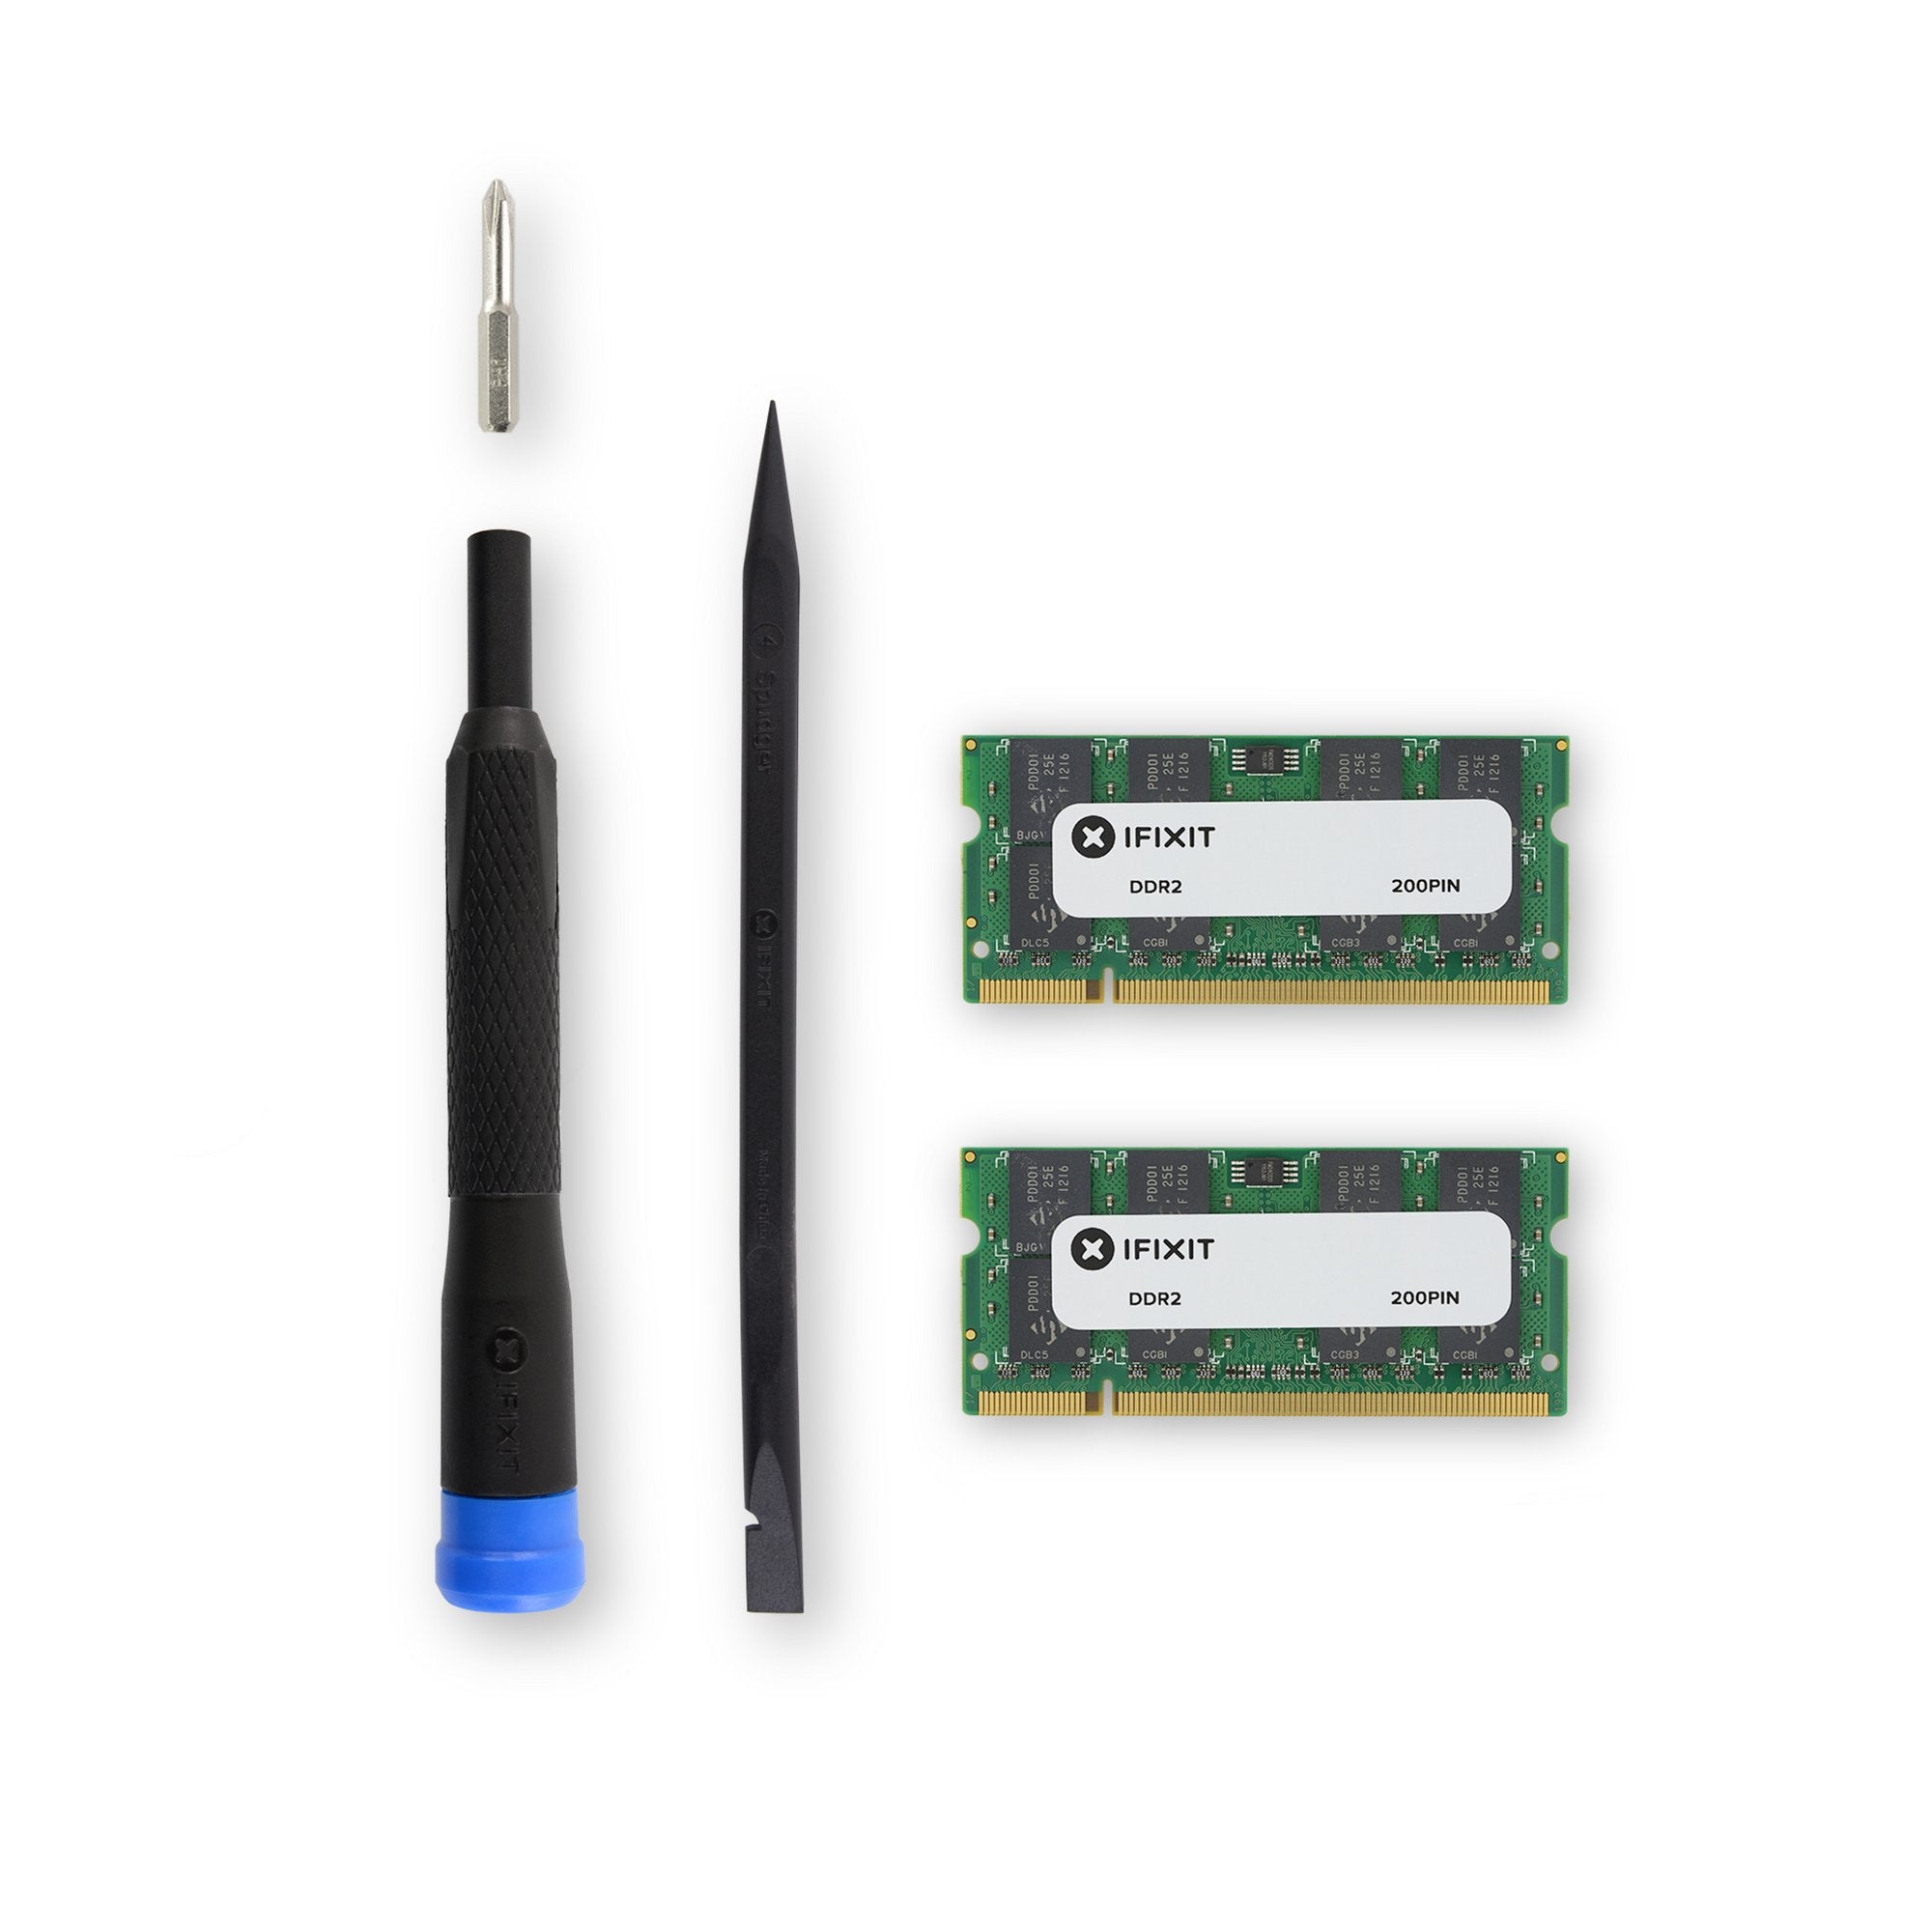 iMac Intel 24" EMC 2111 (Late 2006) Memory Maxxer RAM Upgrade Kit